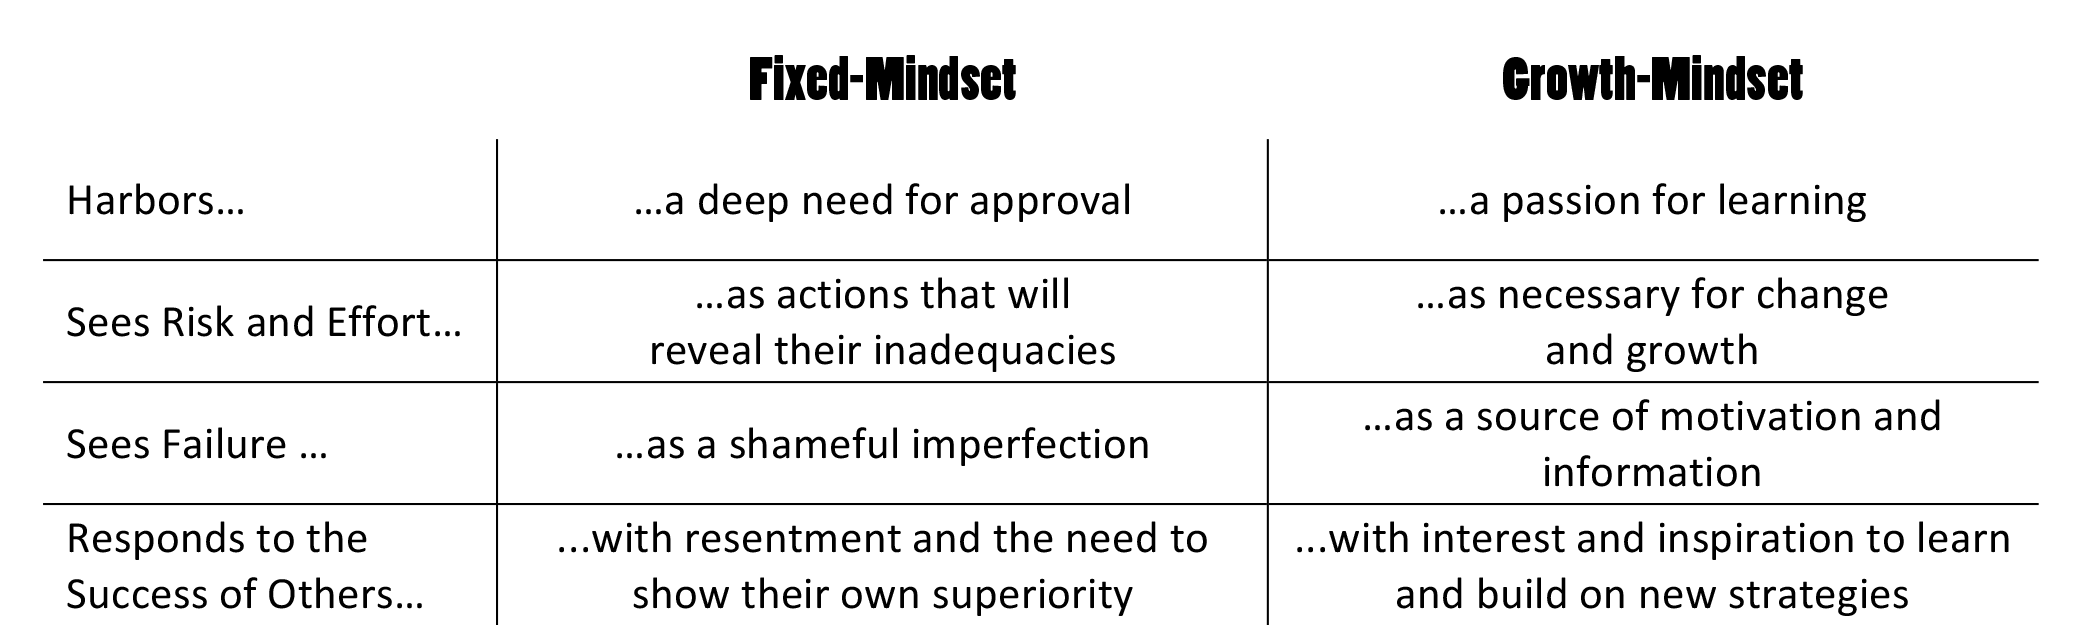 fixed mindset growth mindset qualities